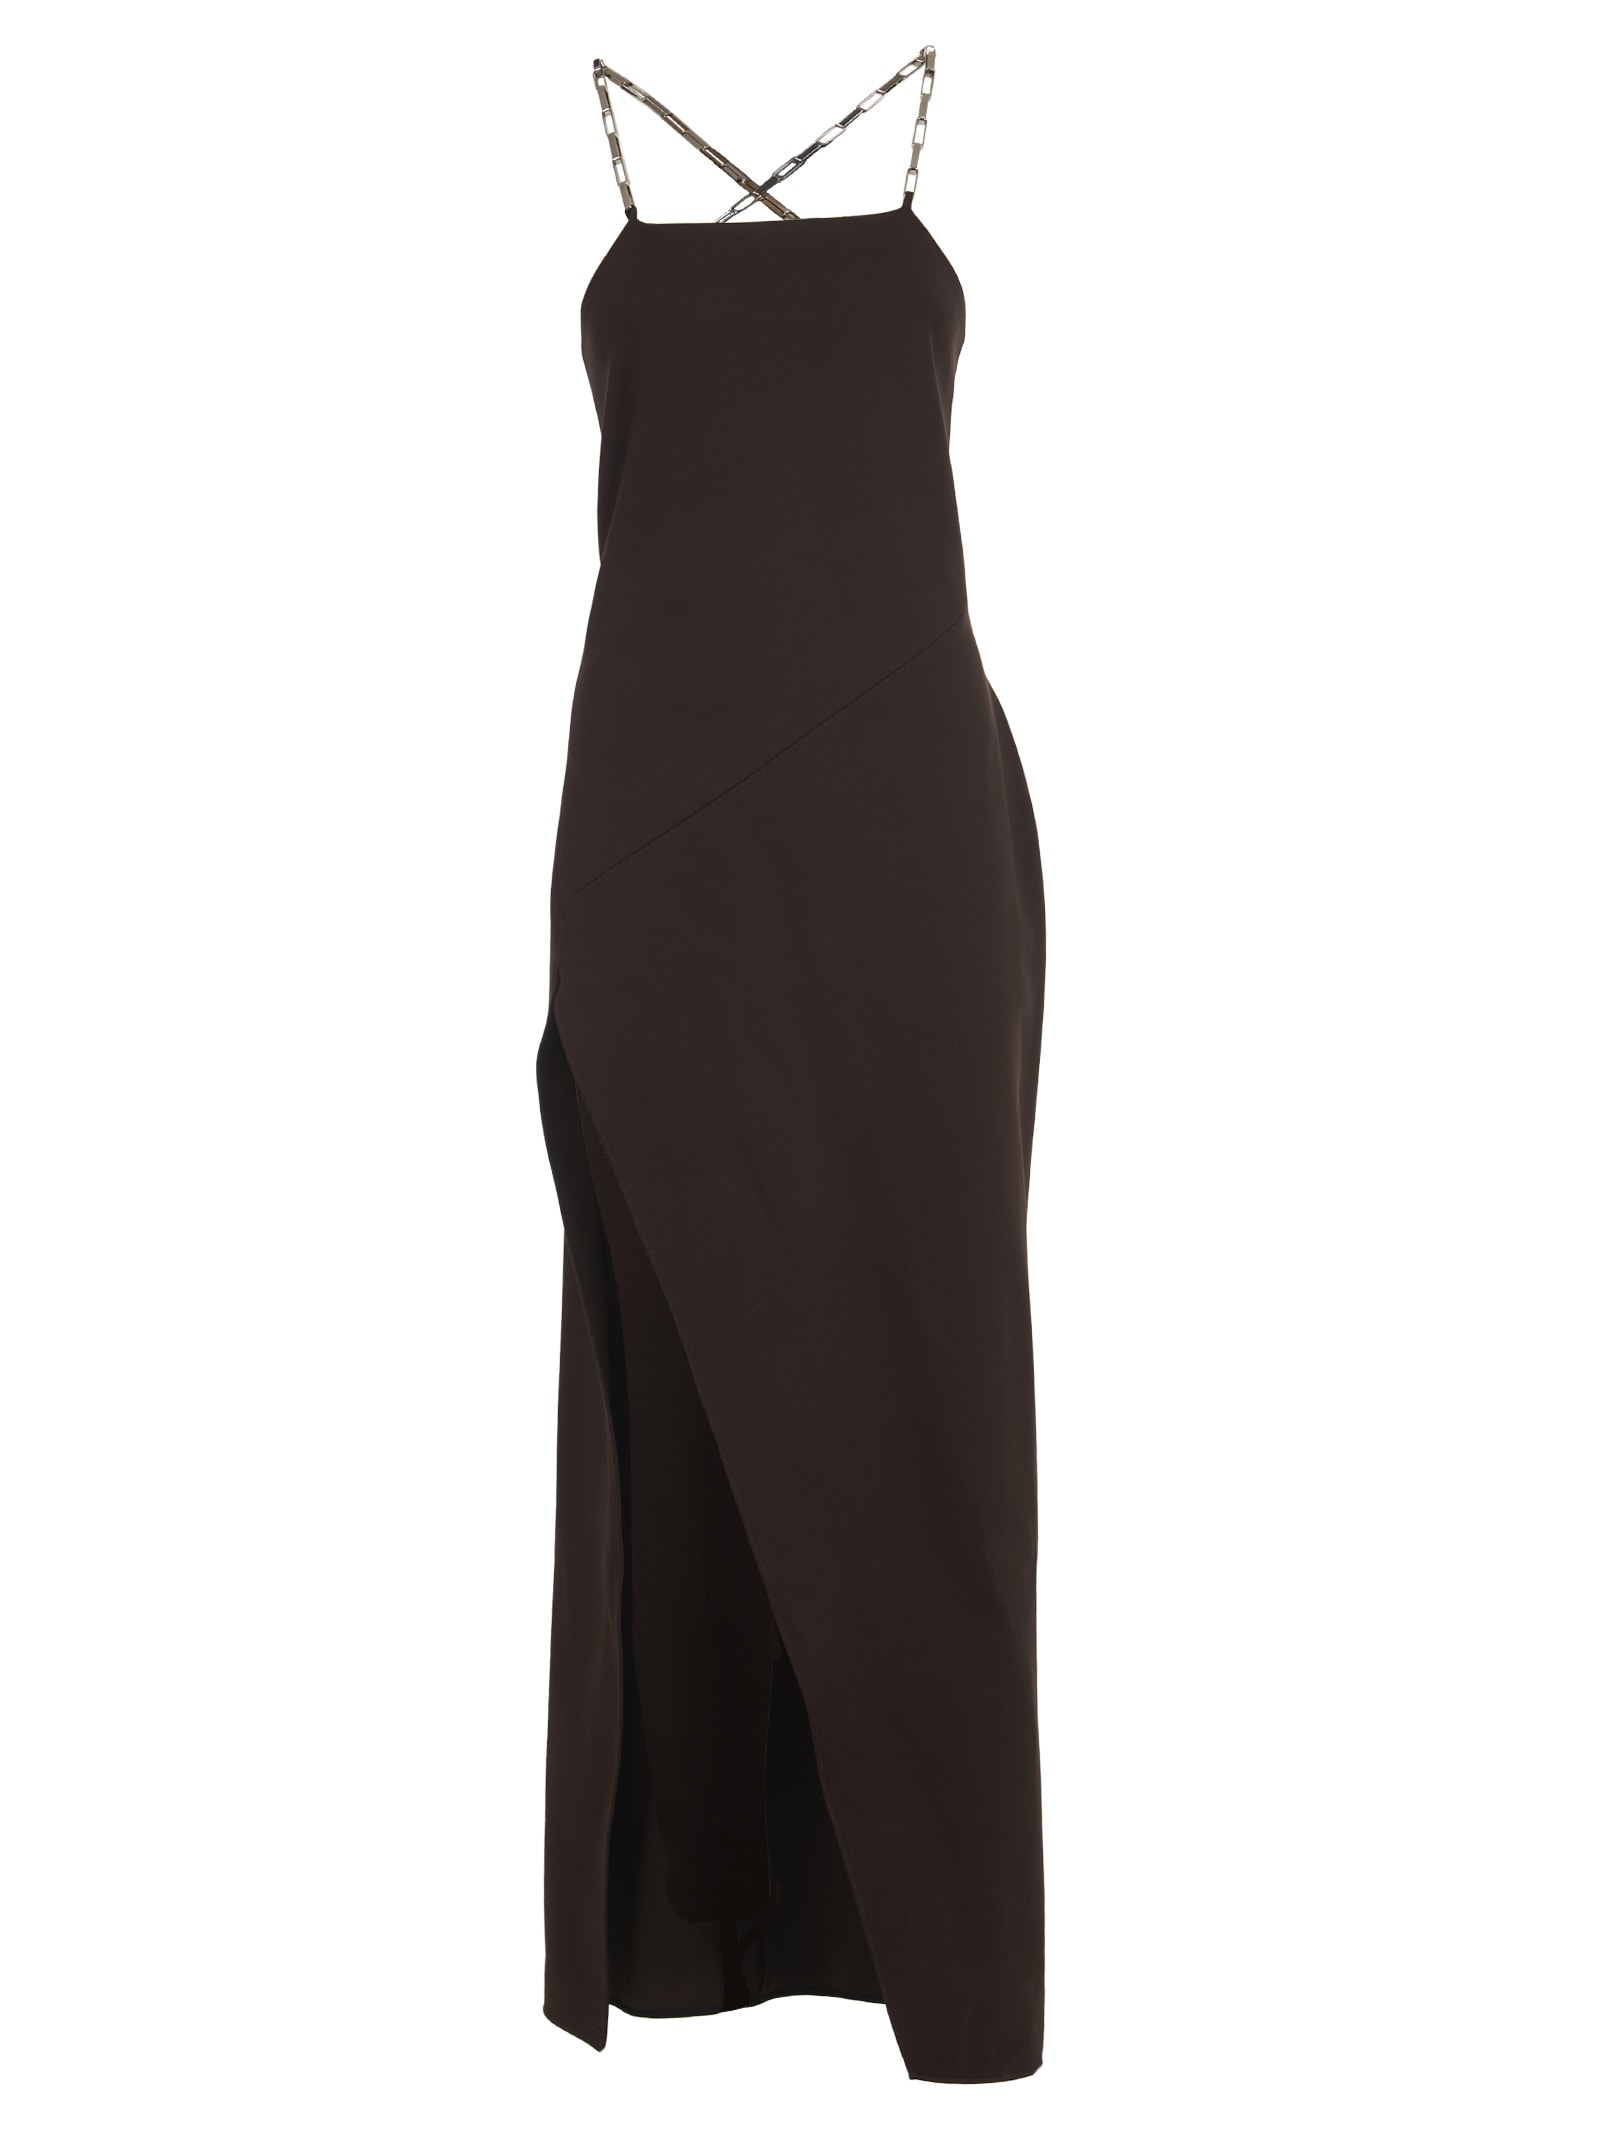 The Attico Brown Long Dress